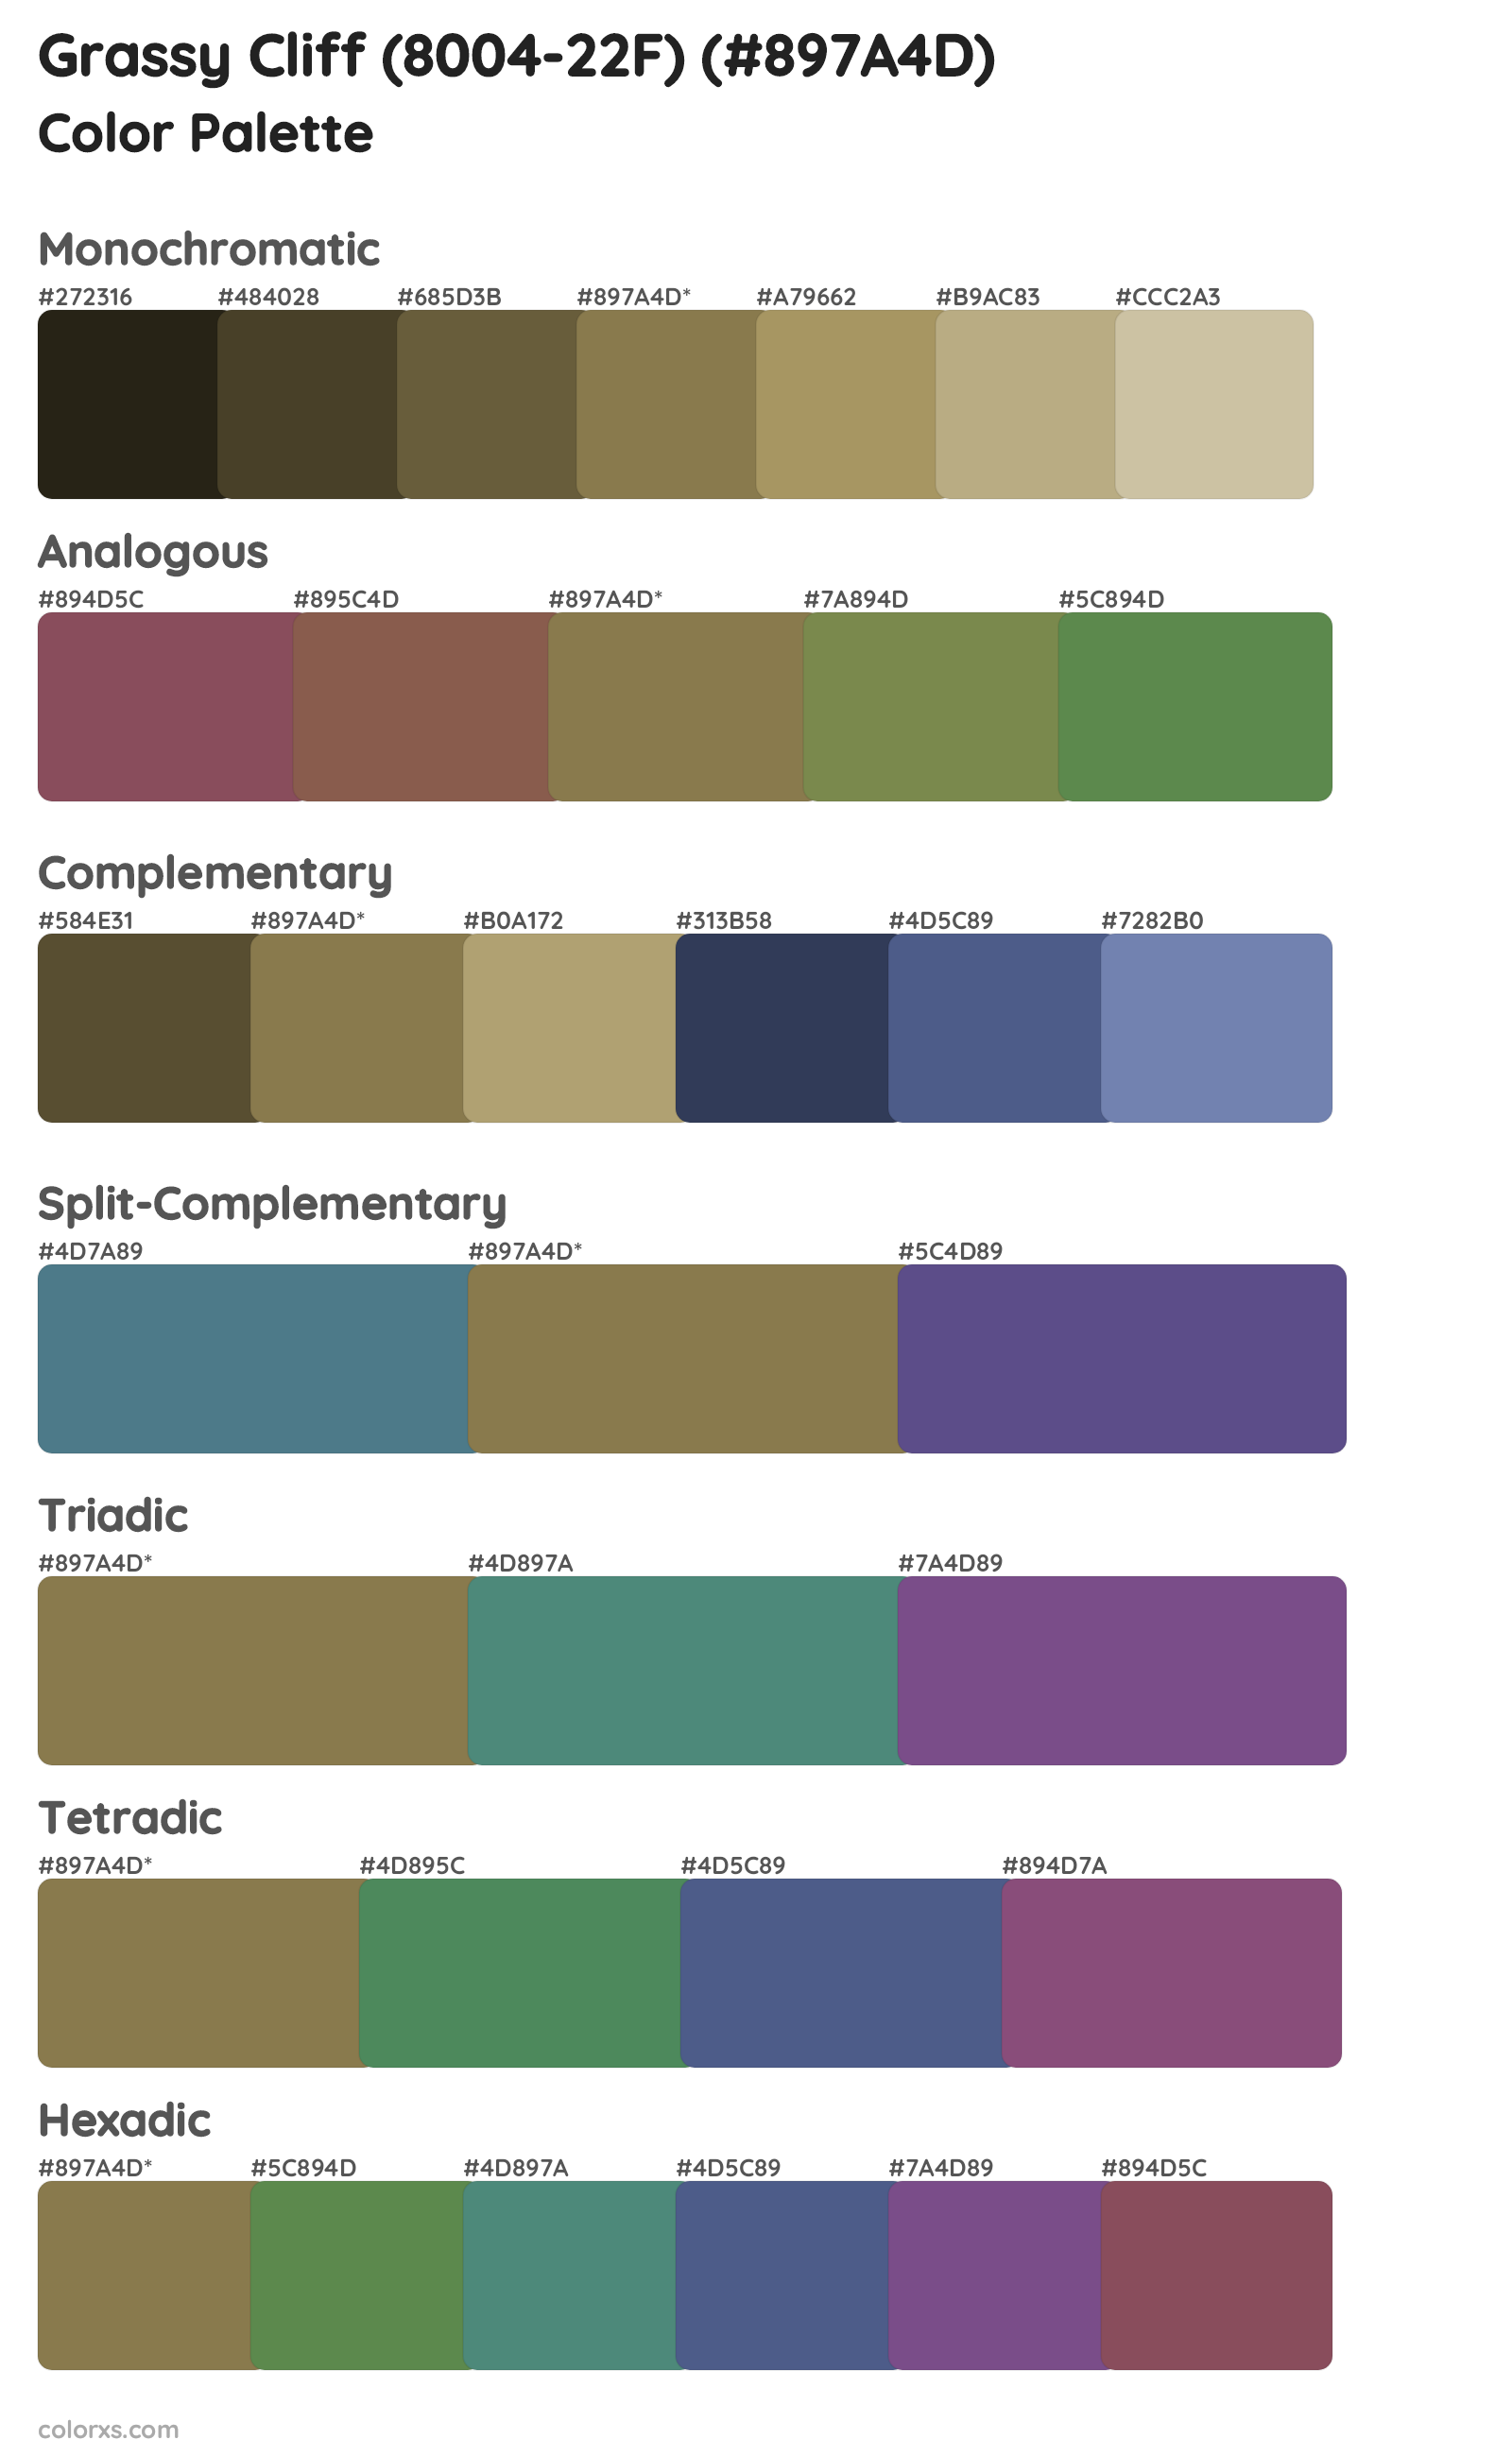 Grassy Cliff (8004-22F) Color Scheme Palettes